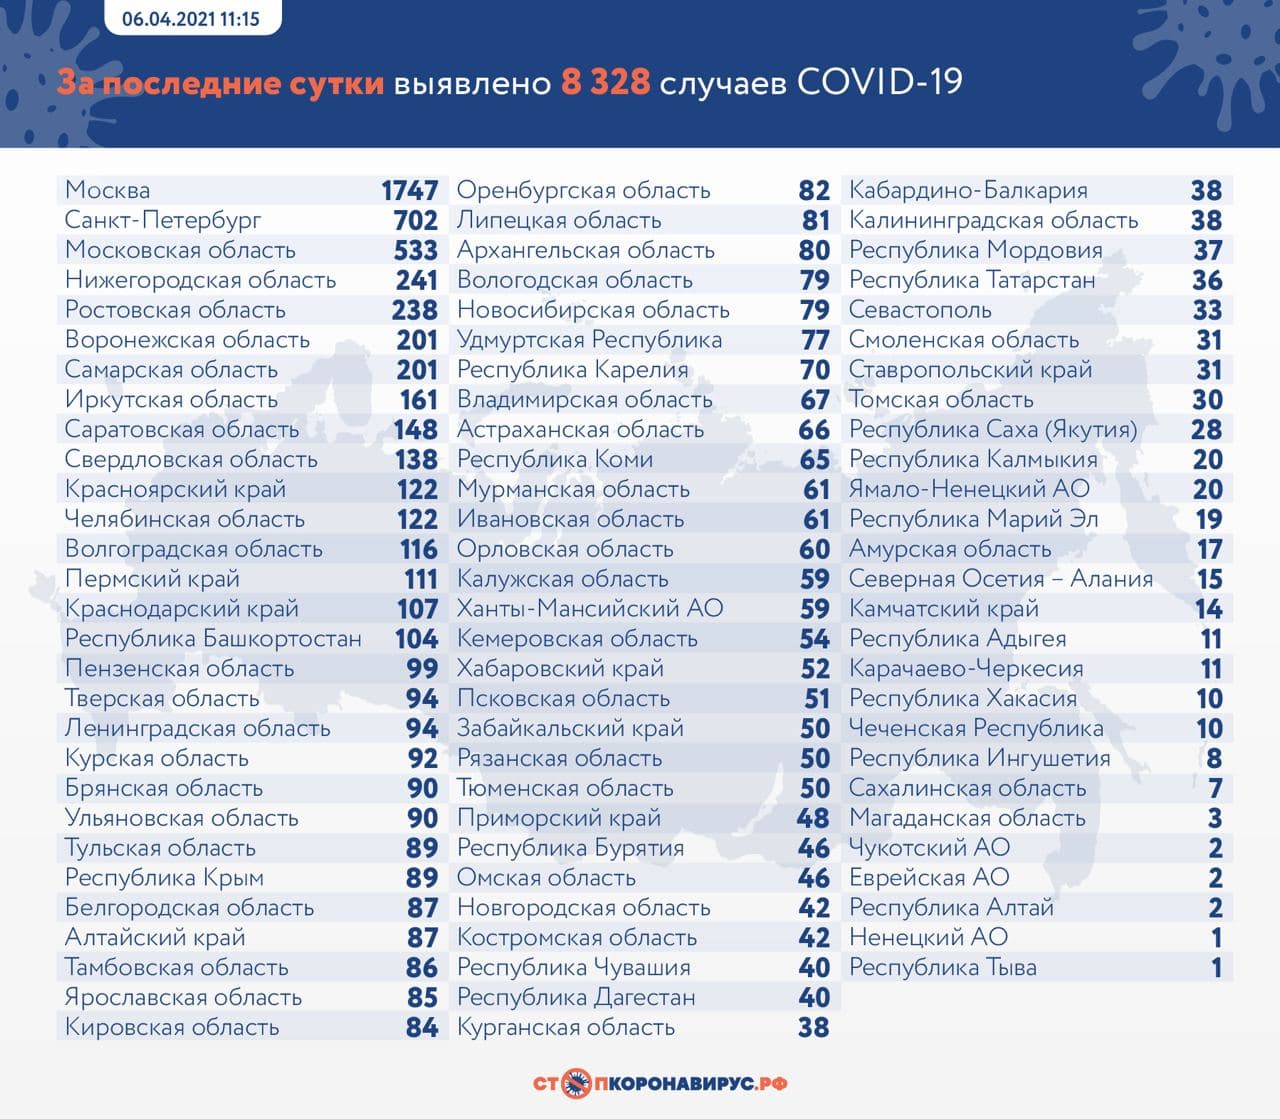 Оперативная статистика по коронавирусу в России на 6 апреля